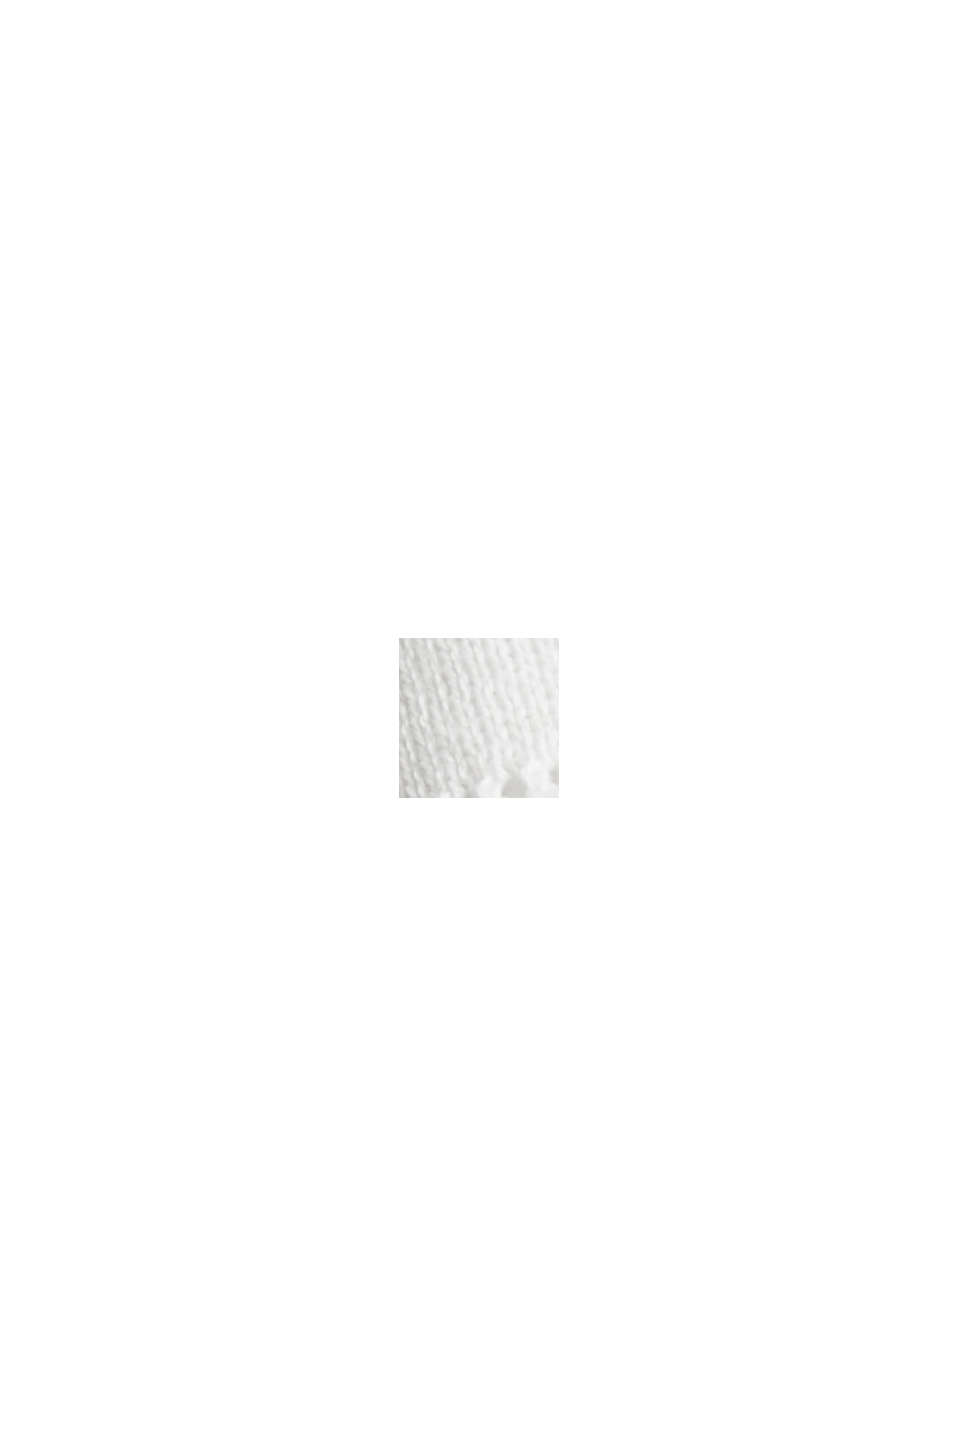 Pulovr ze vzorované pleteniny, bio bavlna, OFF WHITE, swatch